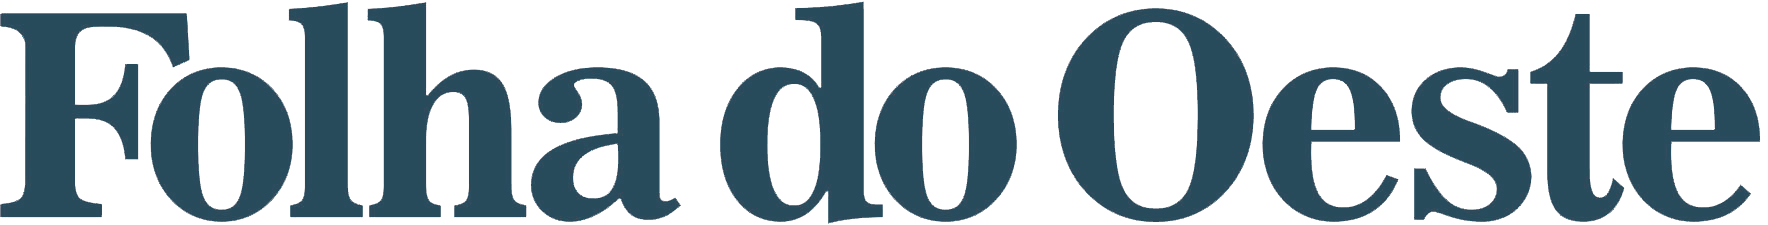 Logo Jornal